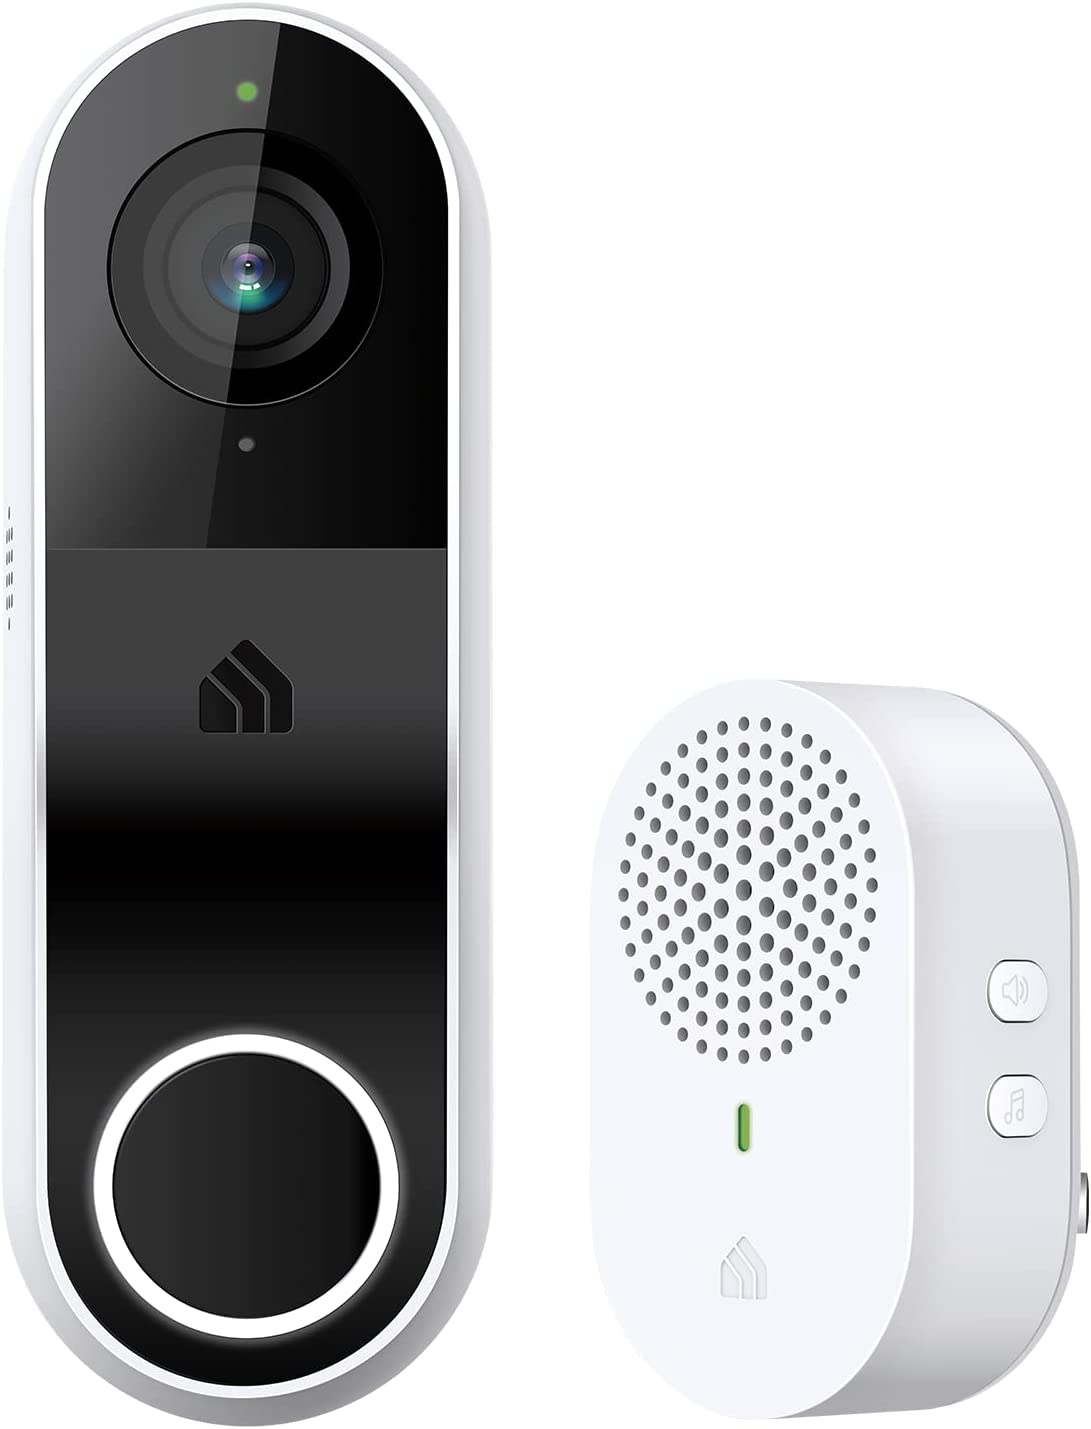 Kasa Smart Video Doorbell Camera – Just $44.99 at Amazon